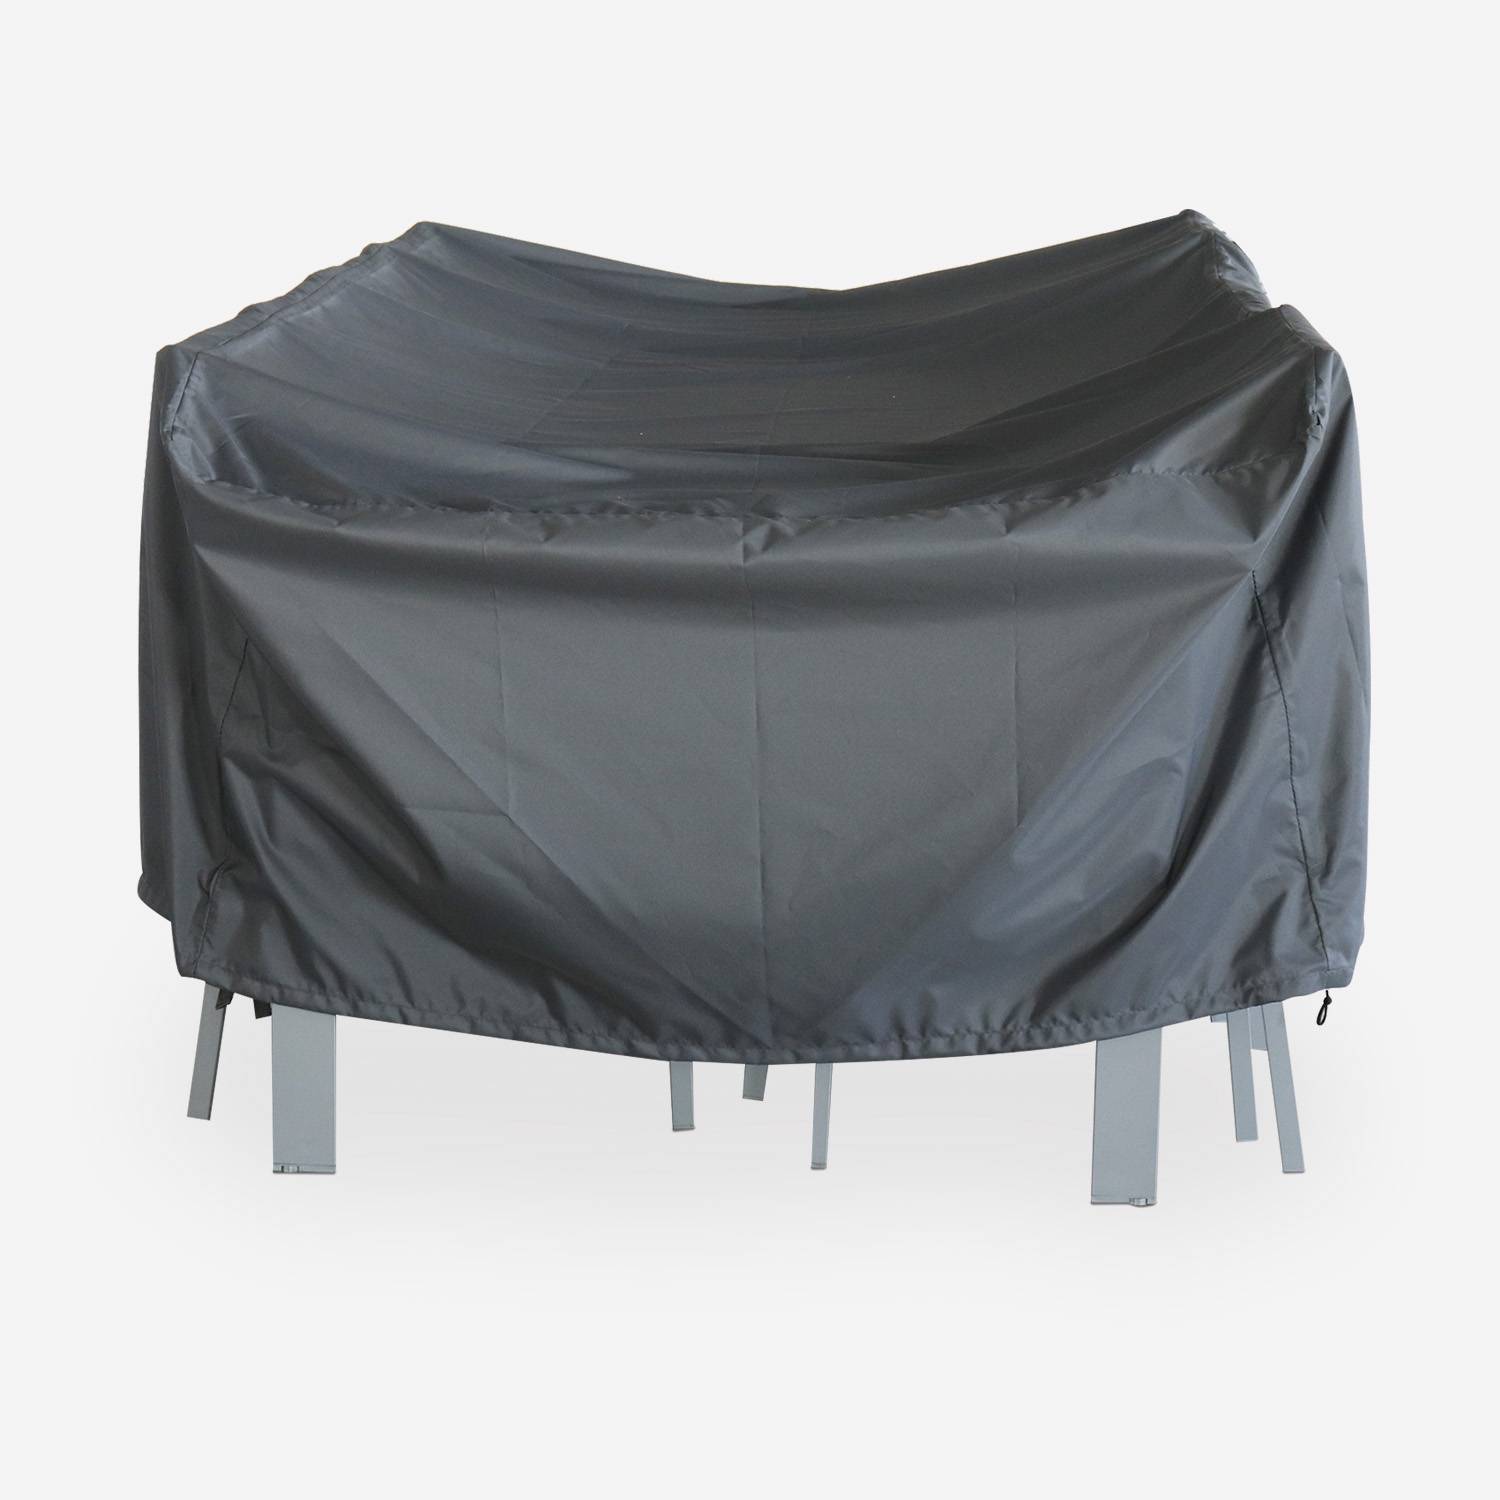 Cobertura protectora 235x135cm cinza escuro - Cobertura rectangular de poliéster revestido a PA para mesas de jardim Odenton / Washington Photo2